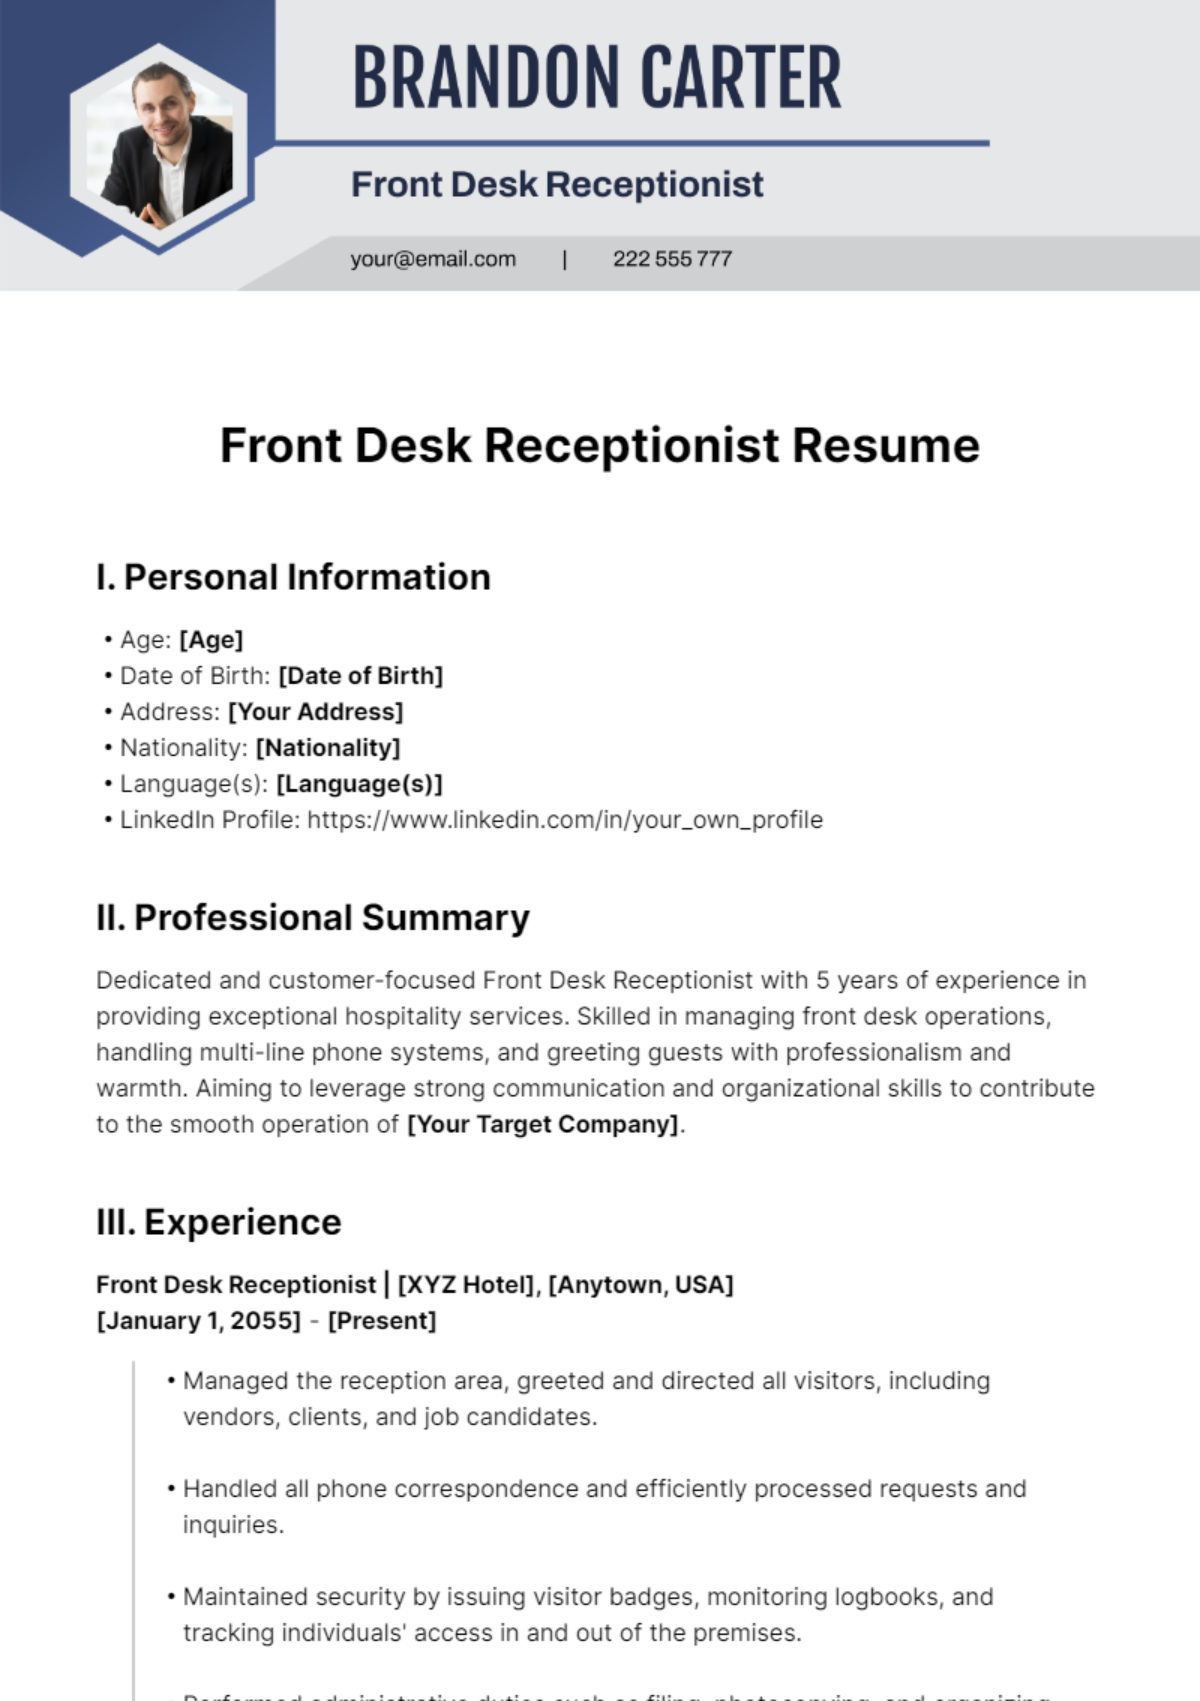 Front Desk Receptionist Resume Template